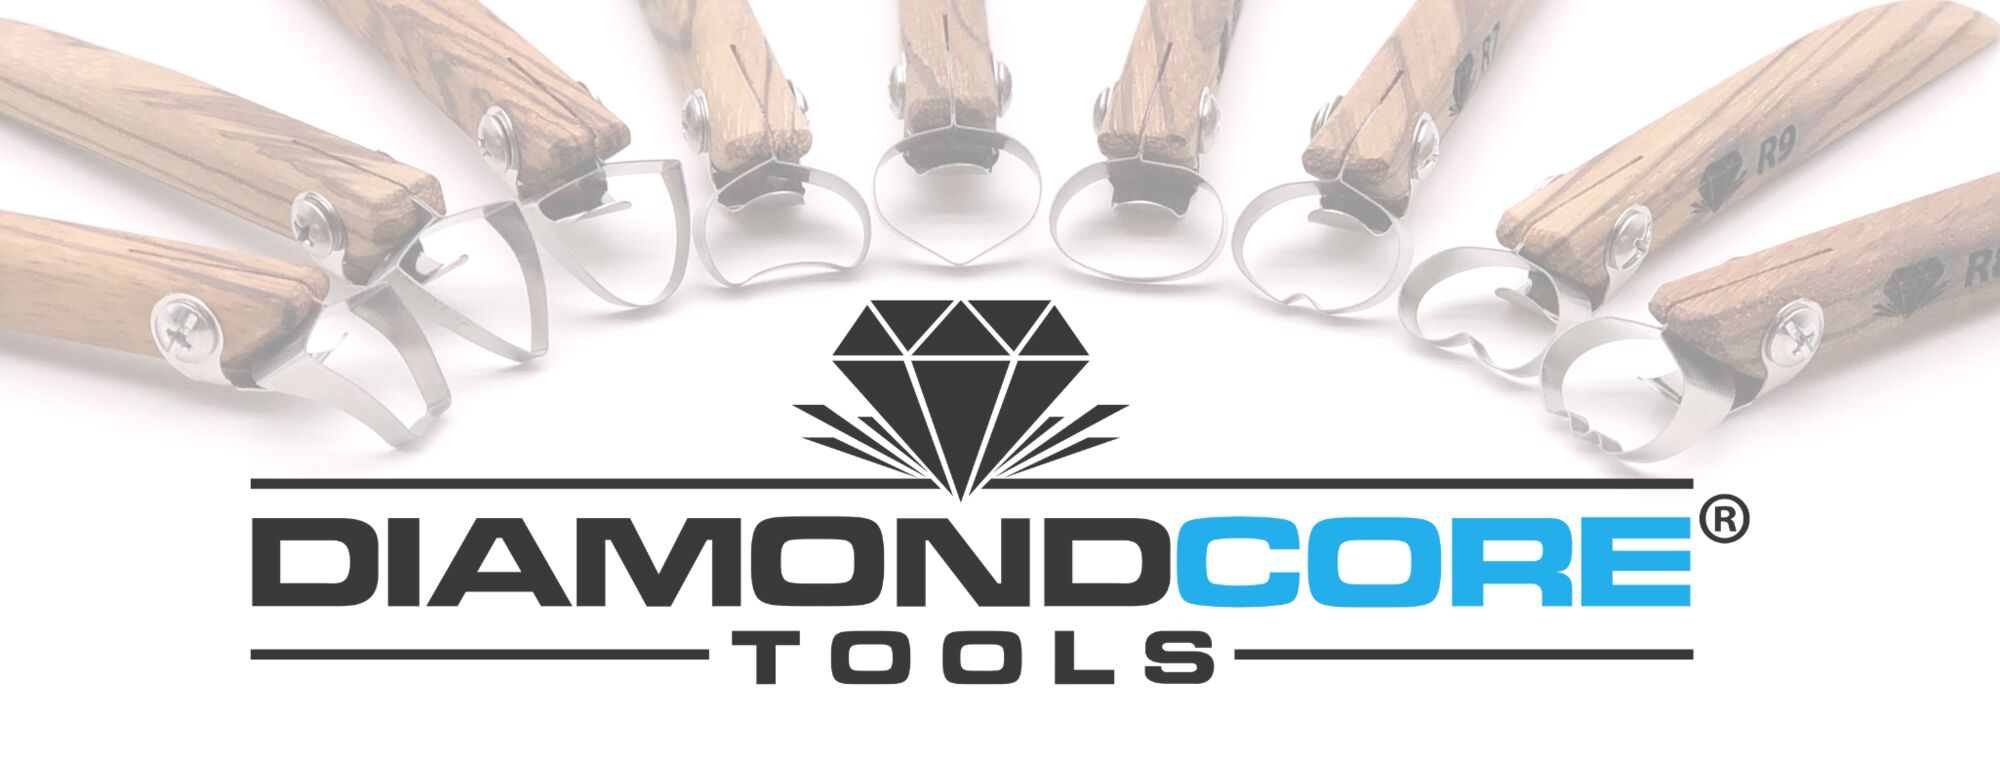 ⭐ DiamondCore Tools Review Spotlight - Diamond Core Tools